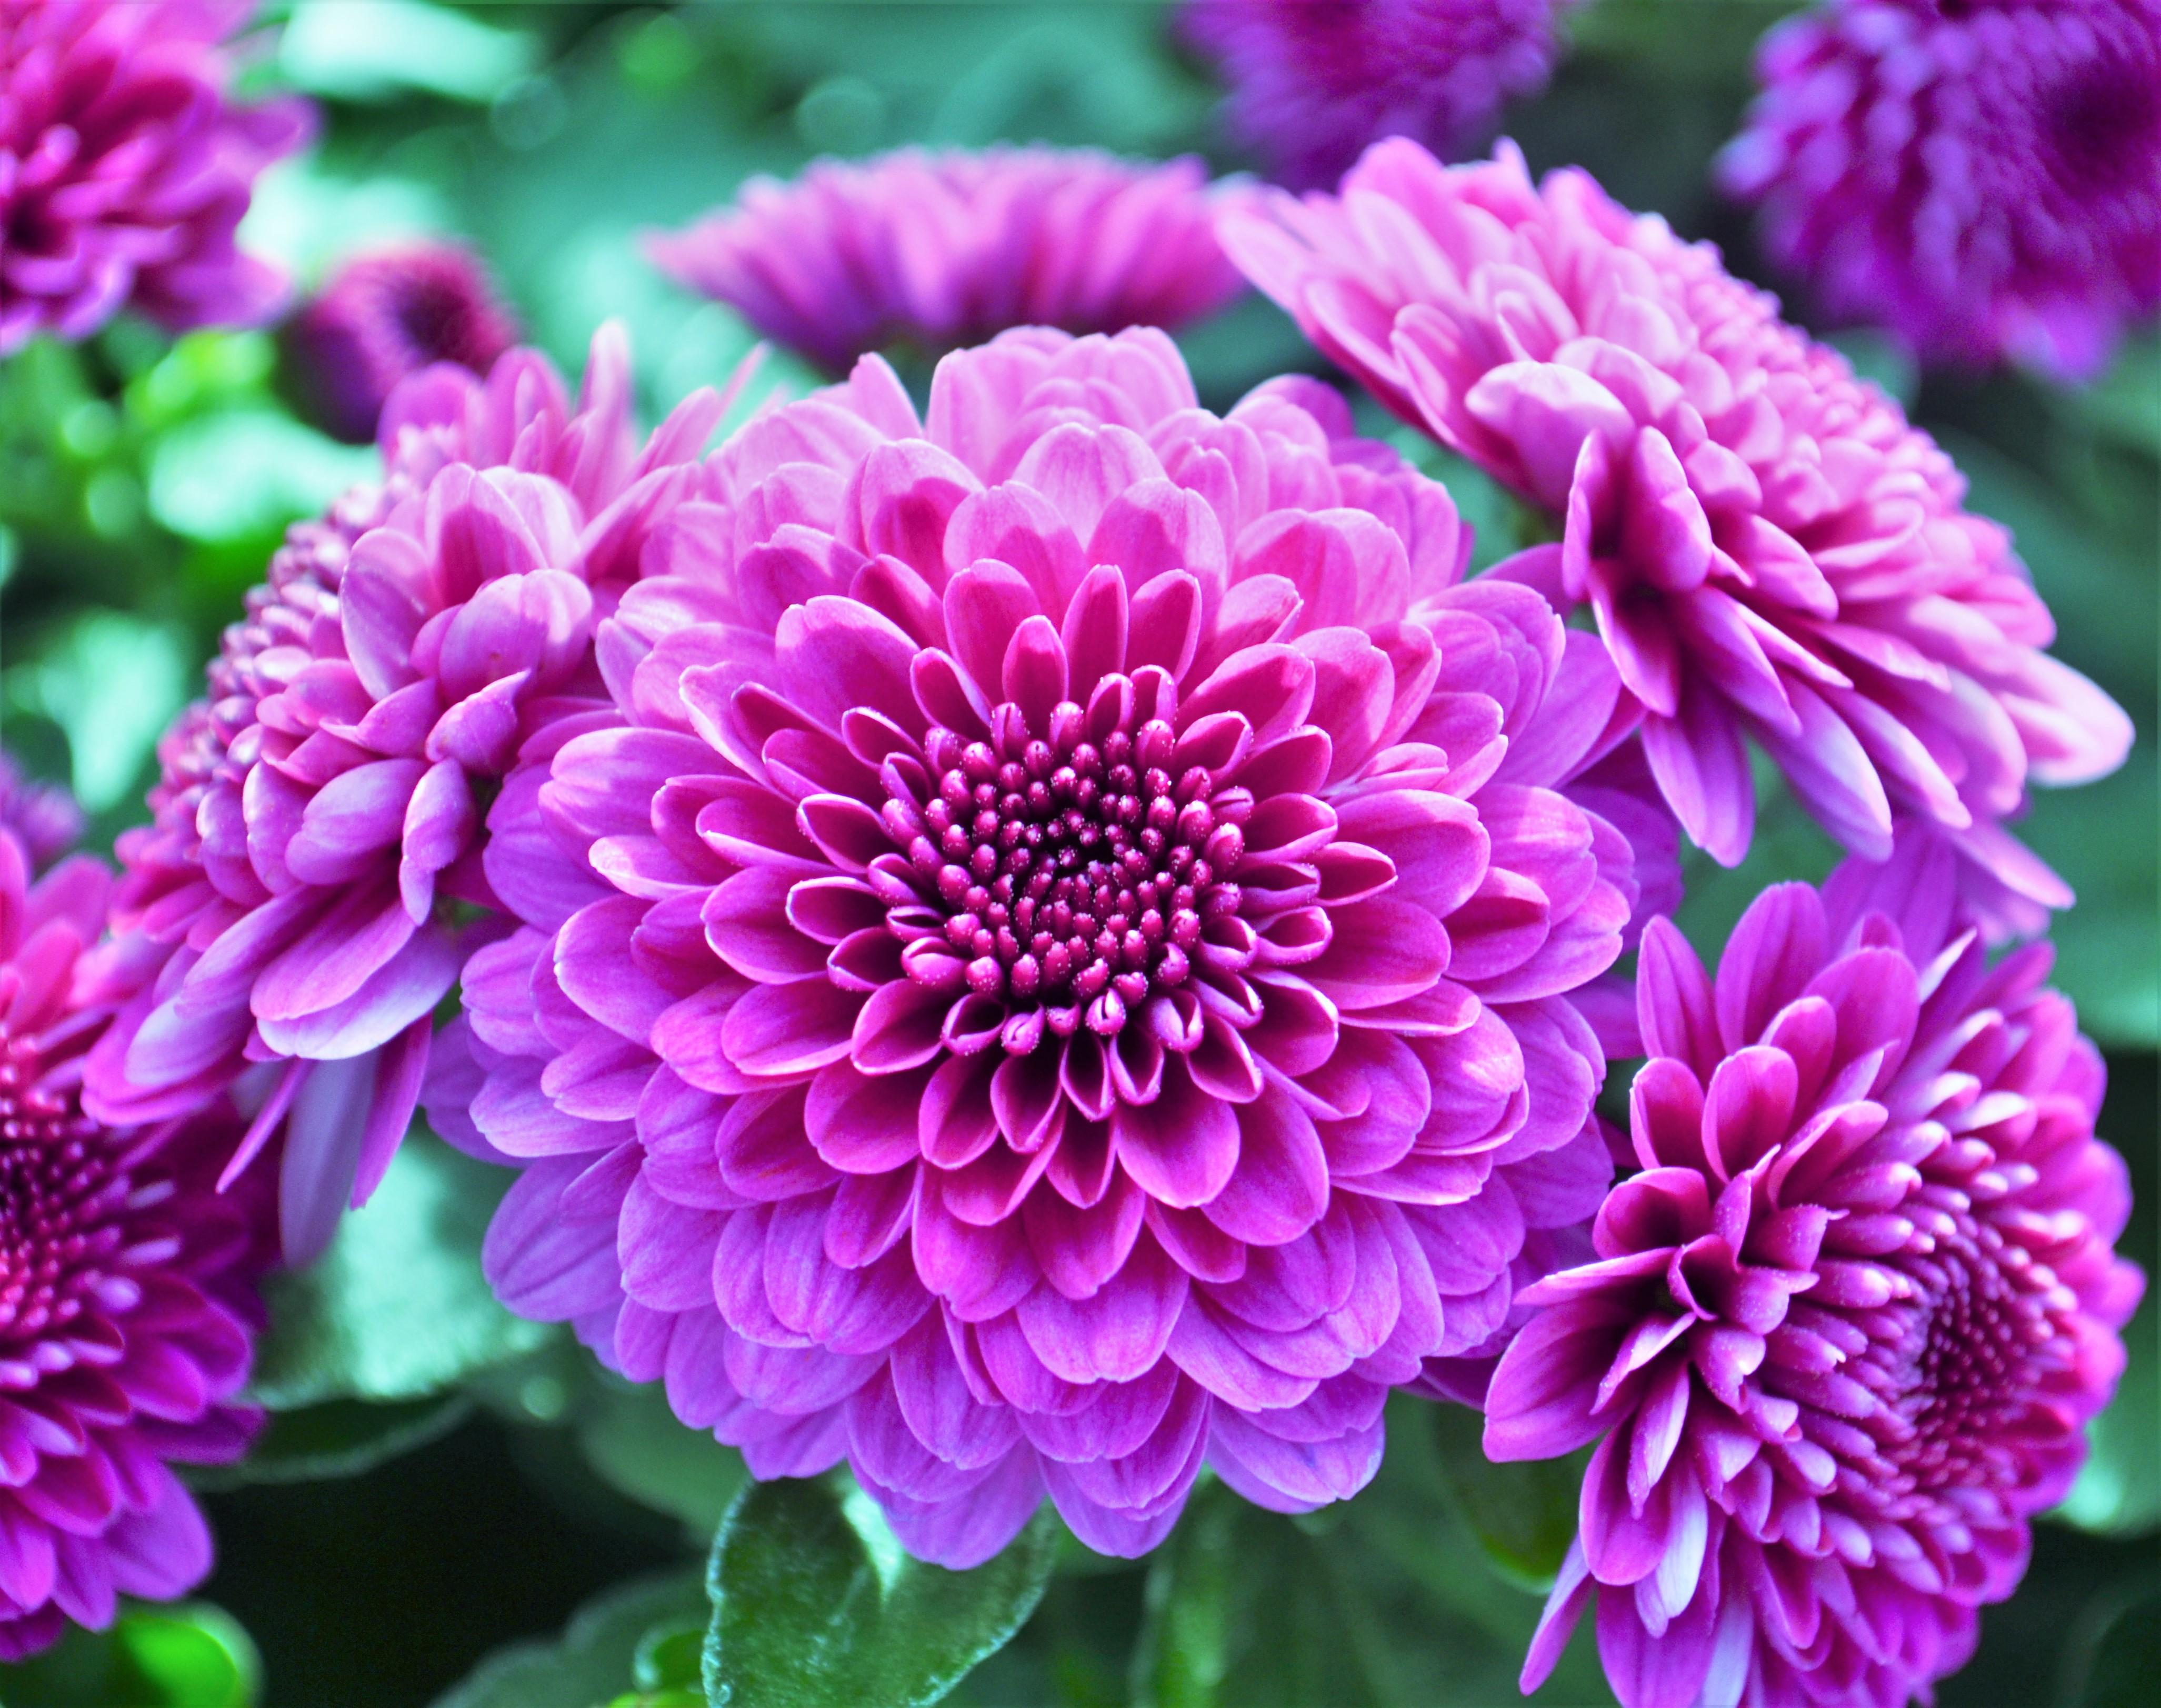 Chrysanthemum Cheryl 'Regal Purple' - Mum from Hillcrest Nursery